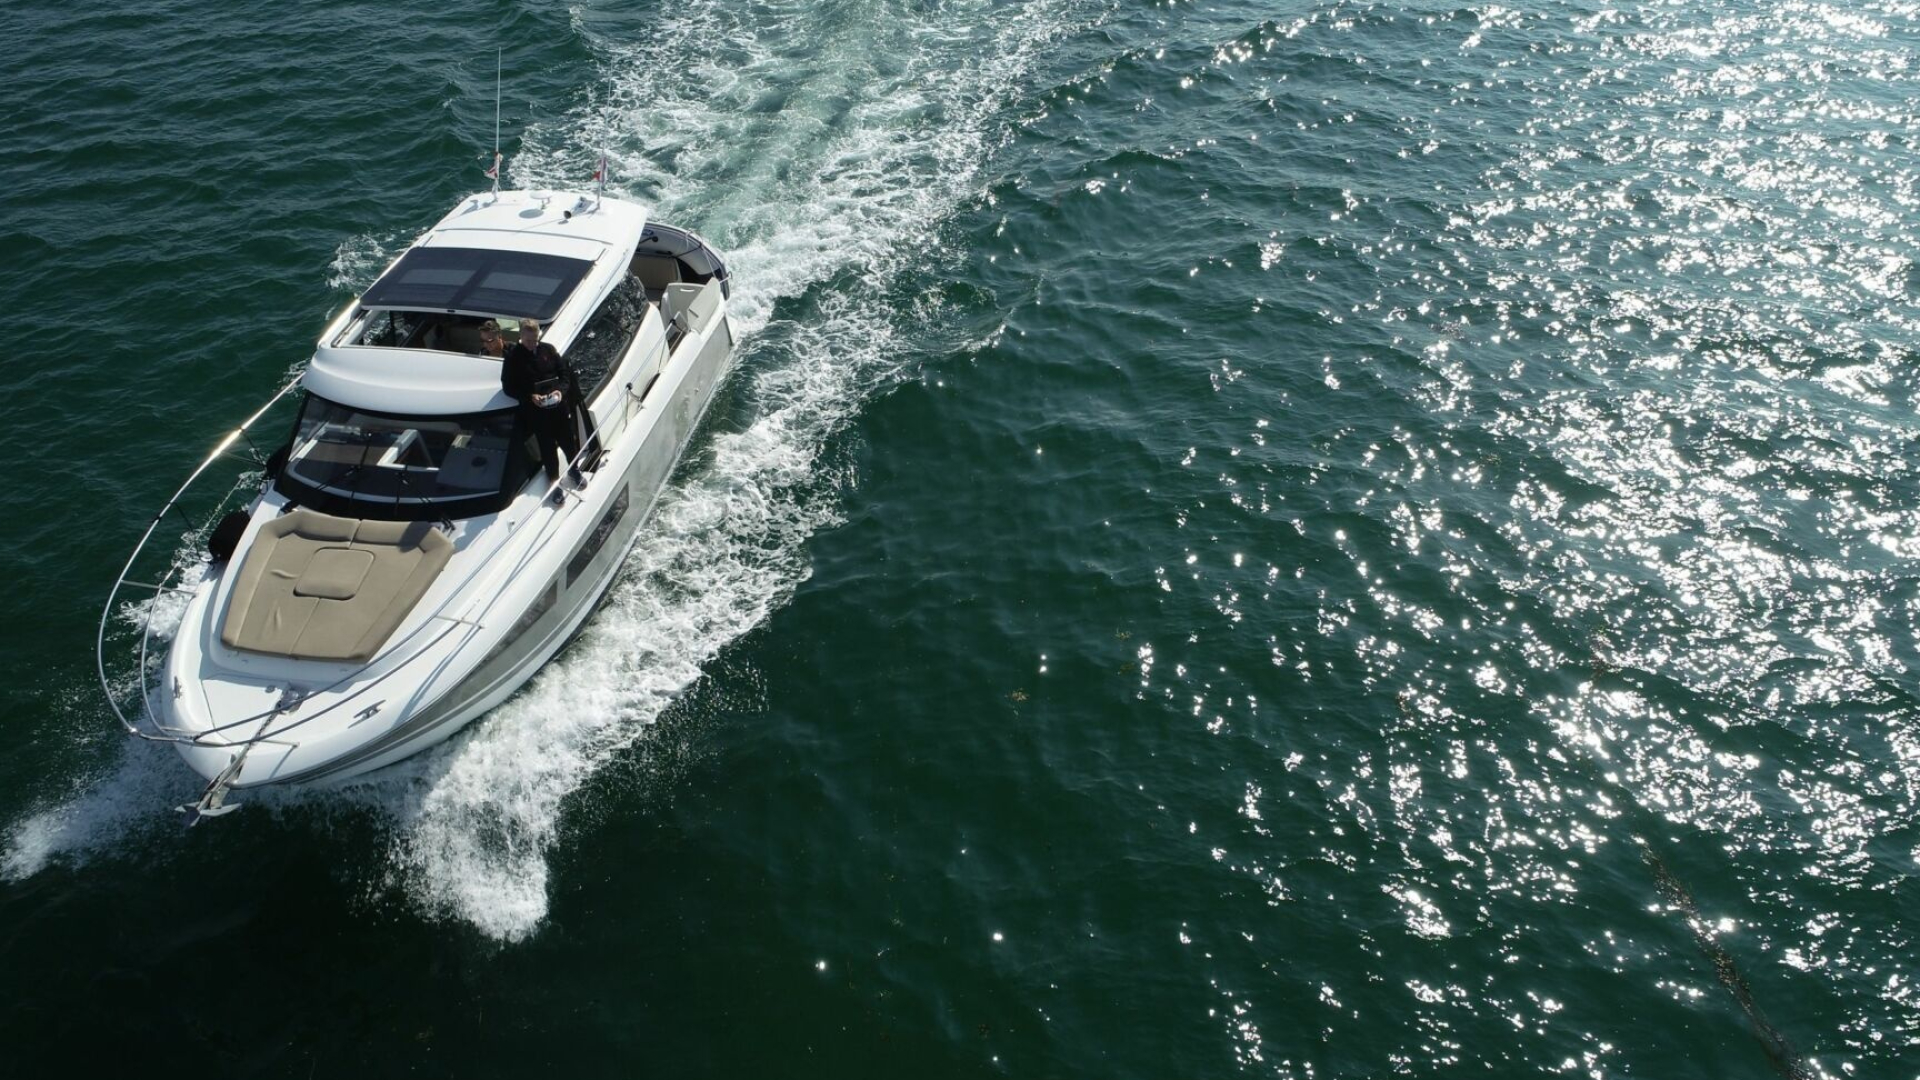 Motorboat: Charter Jeanneau Nc9, Powered water vehicle. 1920x1080 Full HD Wallpaper.